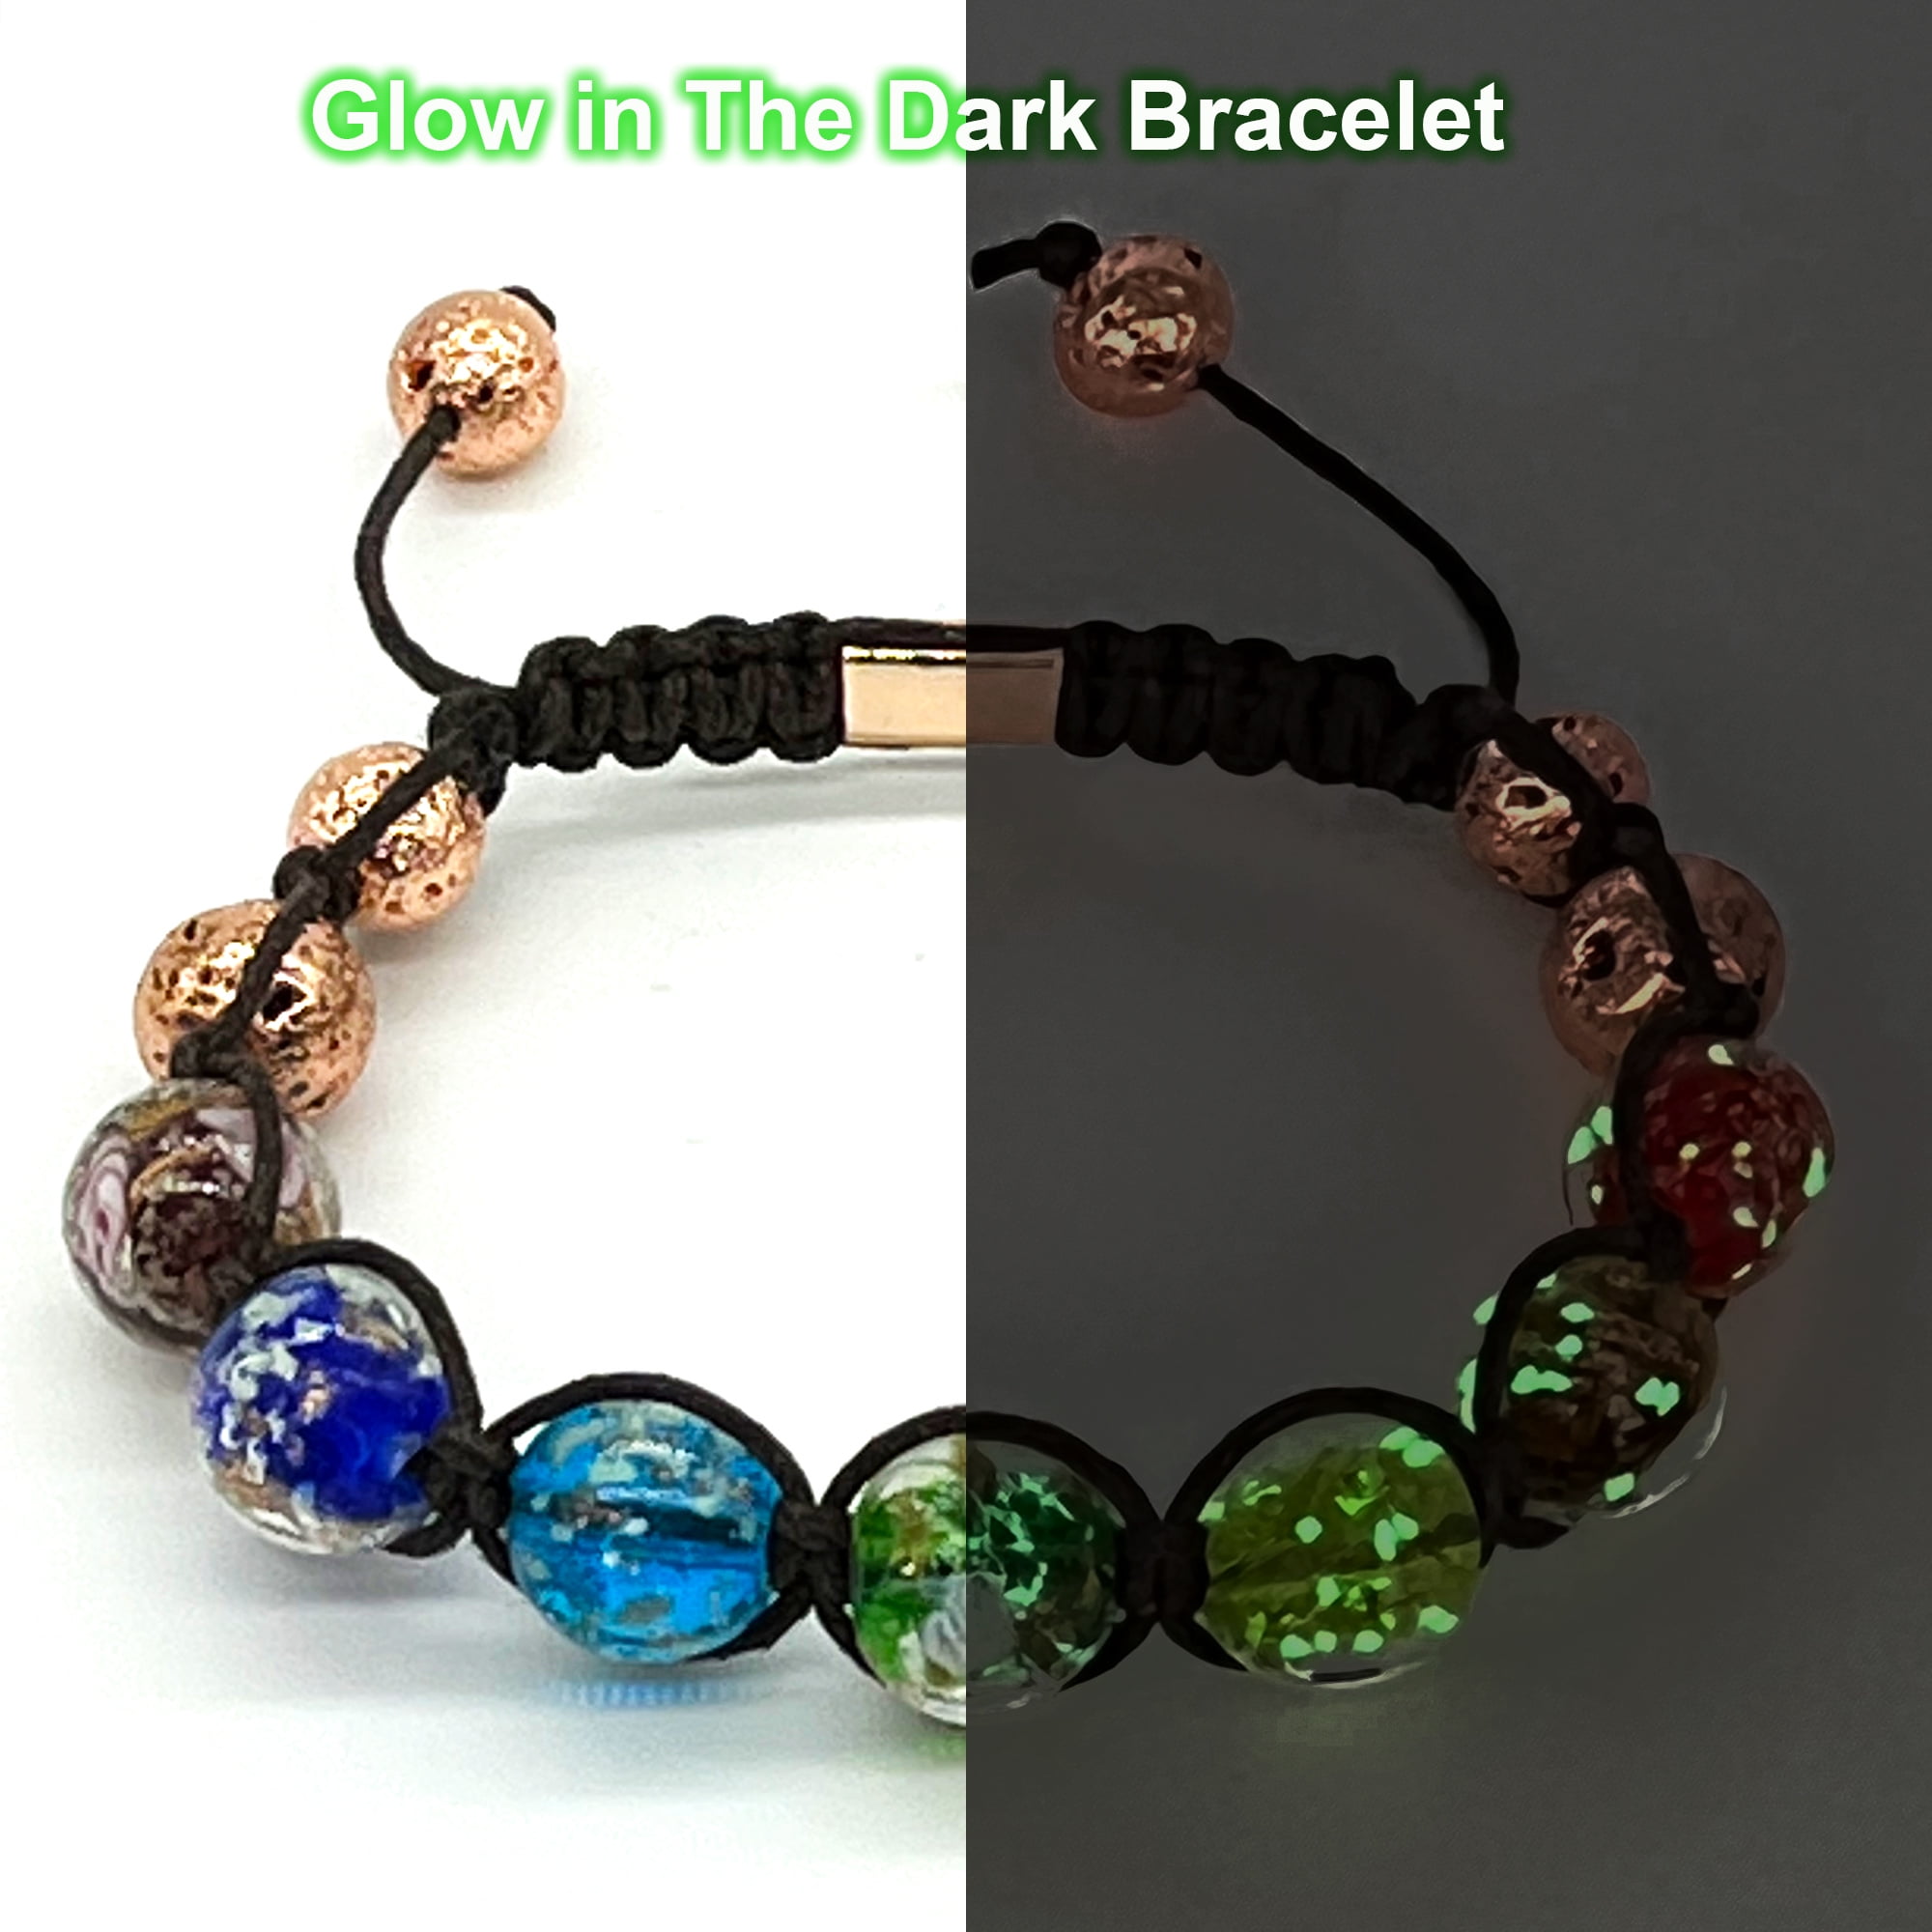 Artsy Crafts Glow in The Dark Beads Bracelet 6-7 inch, Sapphire Blue Firefly Beads Stretch Bracelet for Women, Luminous Murano Glass Beads Healing